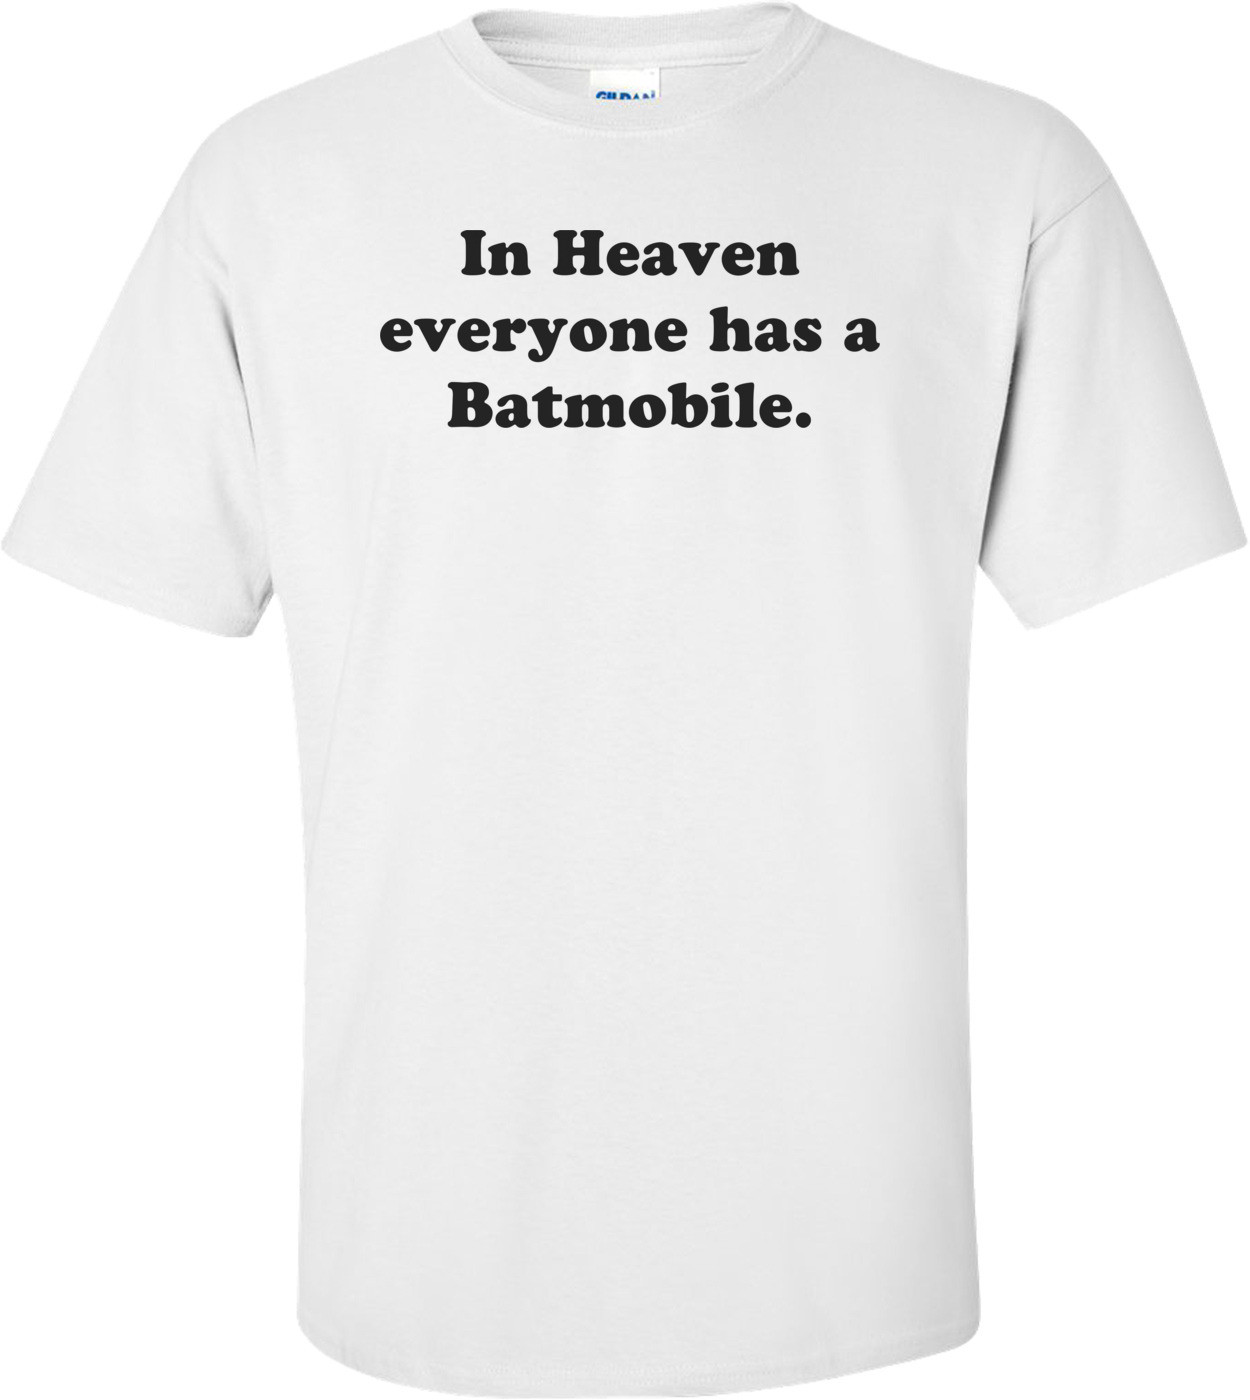 In Heaven everyone has a Batmobile. Shirt